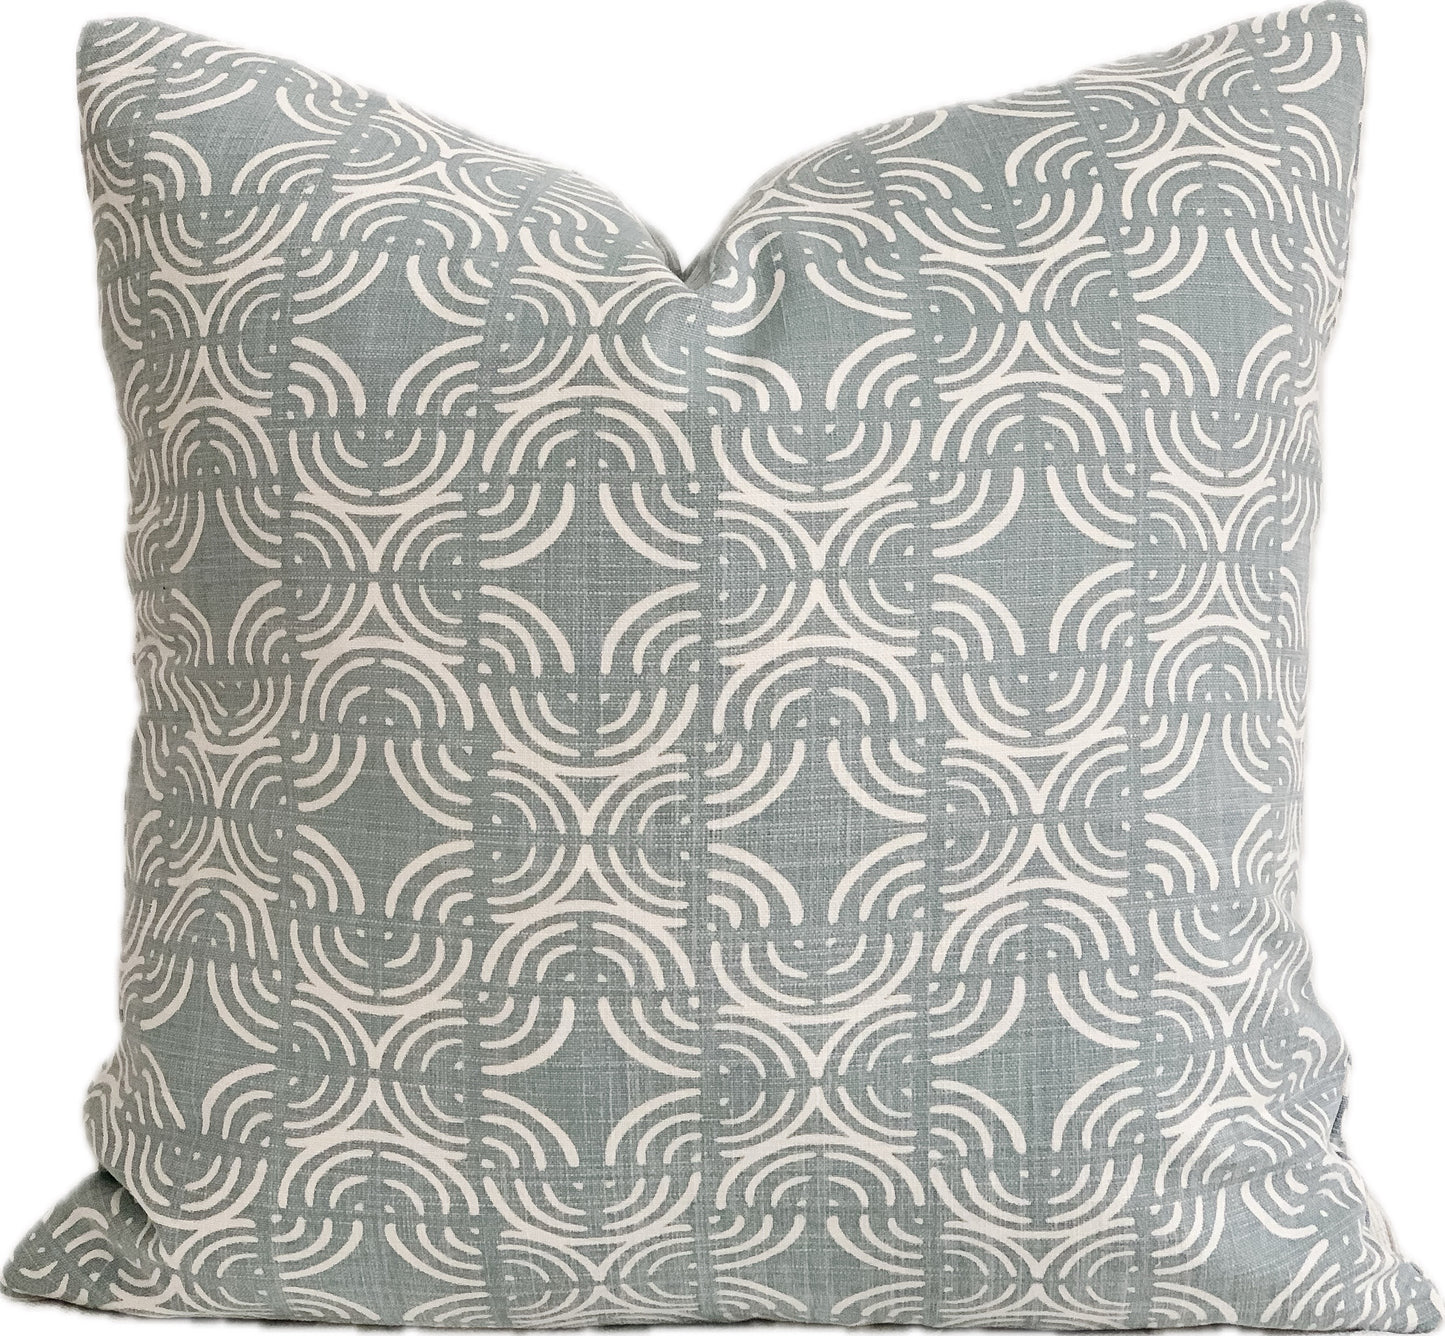 LIght blue and white geometric print square decorative pillow